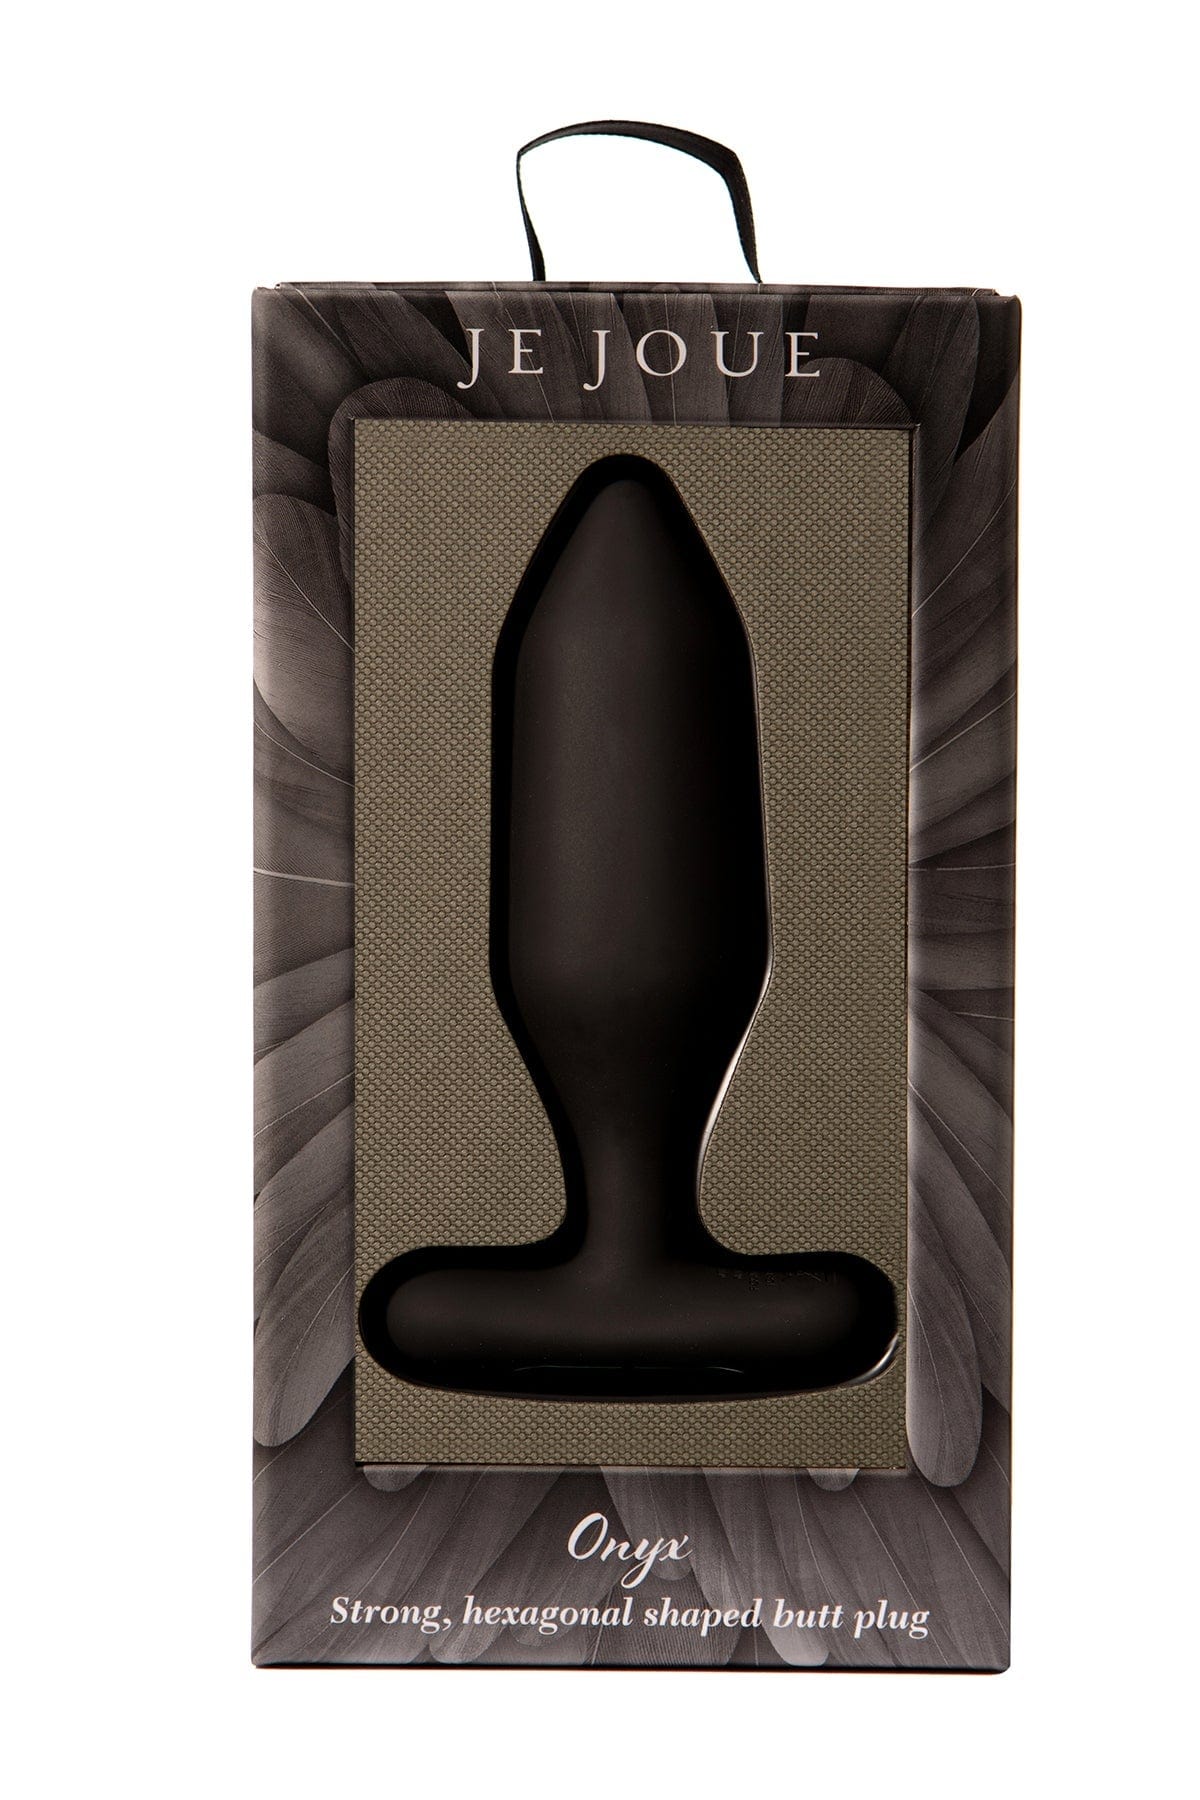 Onyx Vibrating Butt Plug - Je Joue - Black Anal Toys Je Joue   